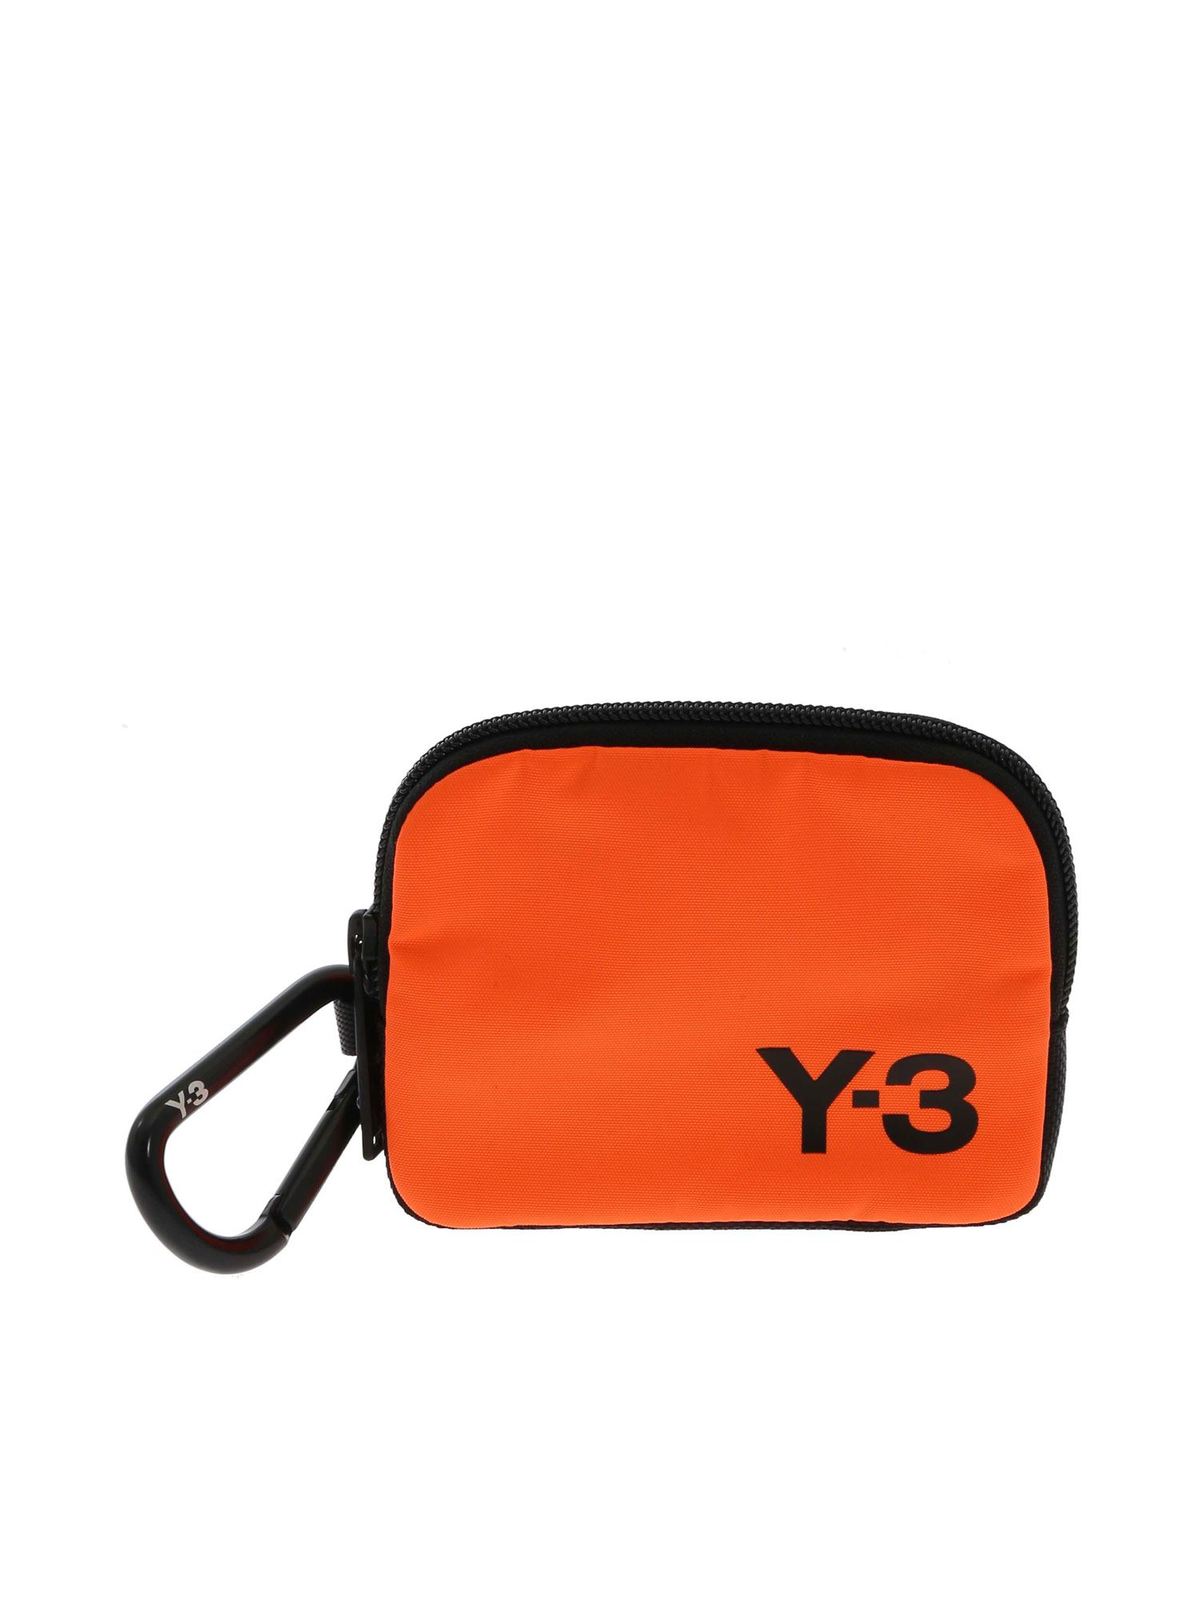 y3 orange